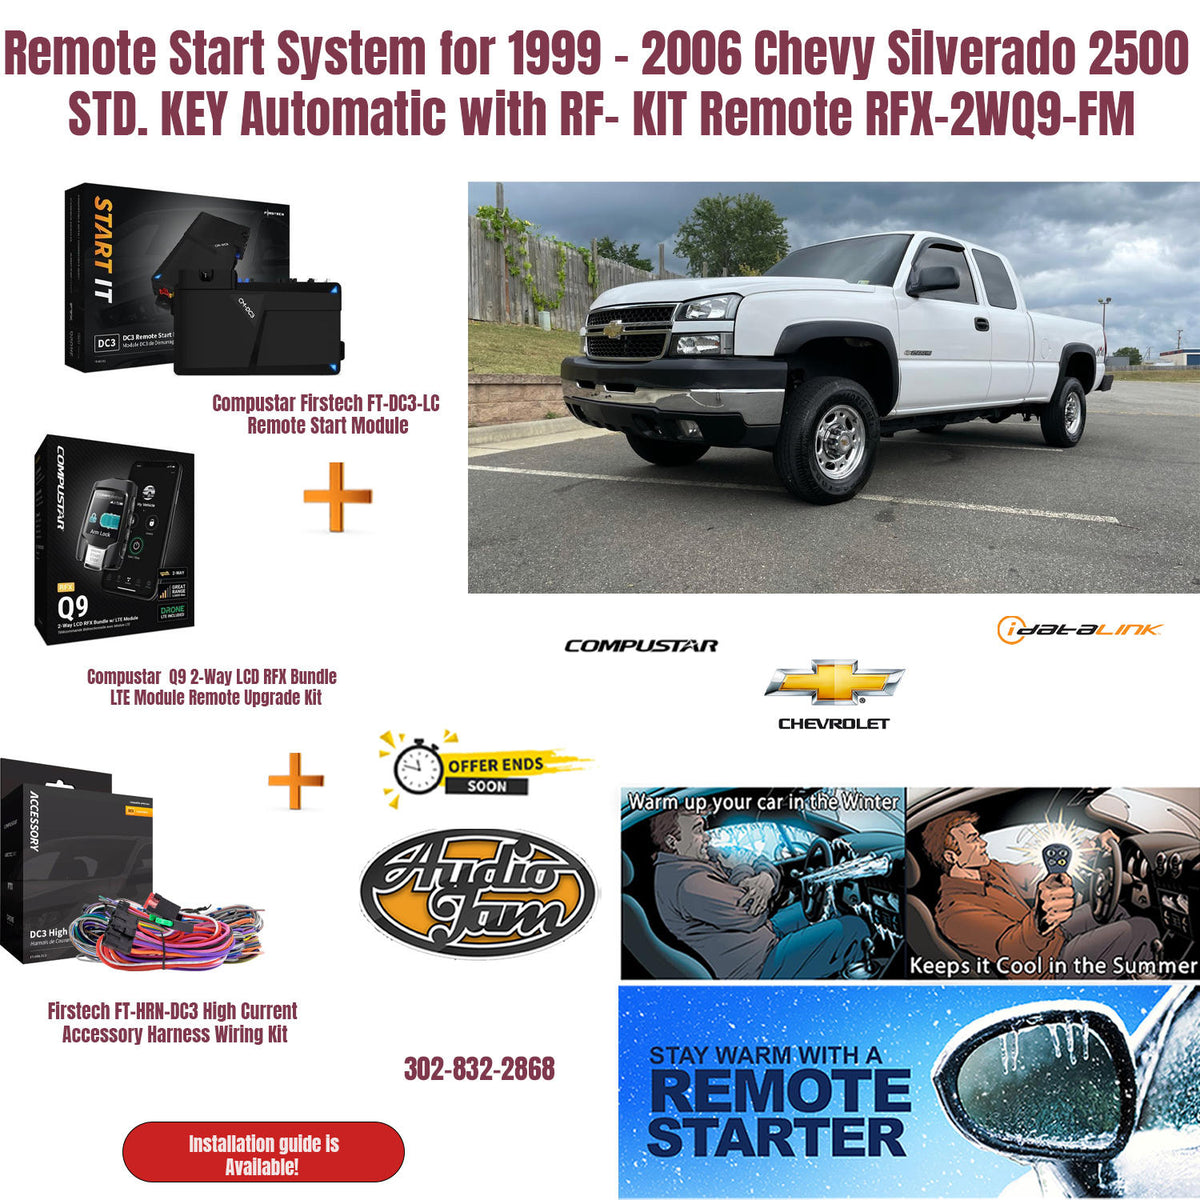 Remote Start System for1999- 2006 Chevy Silverado 2500 STD. KEY Automatic with RF- KIT Remote RFX-2WQ9-FM